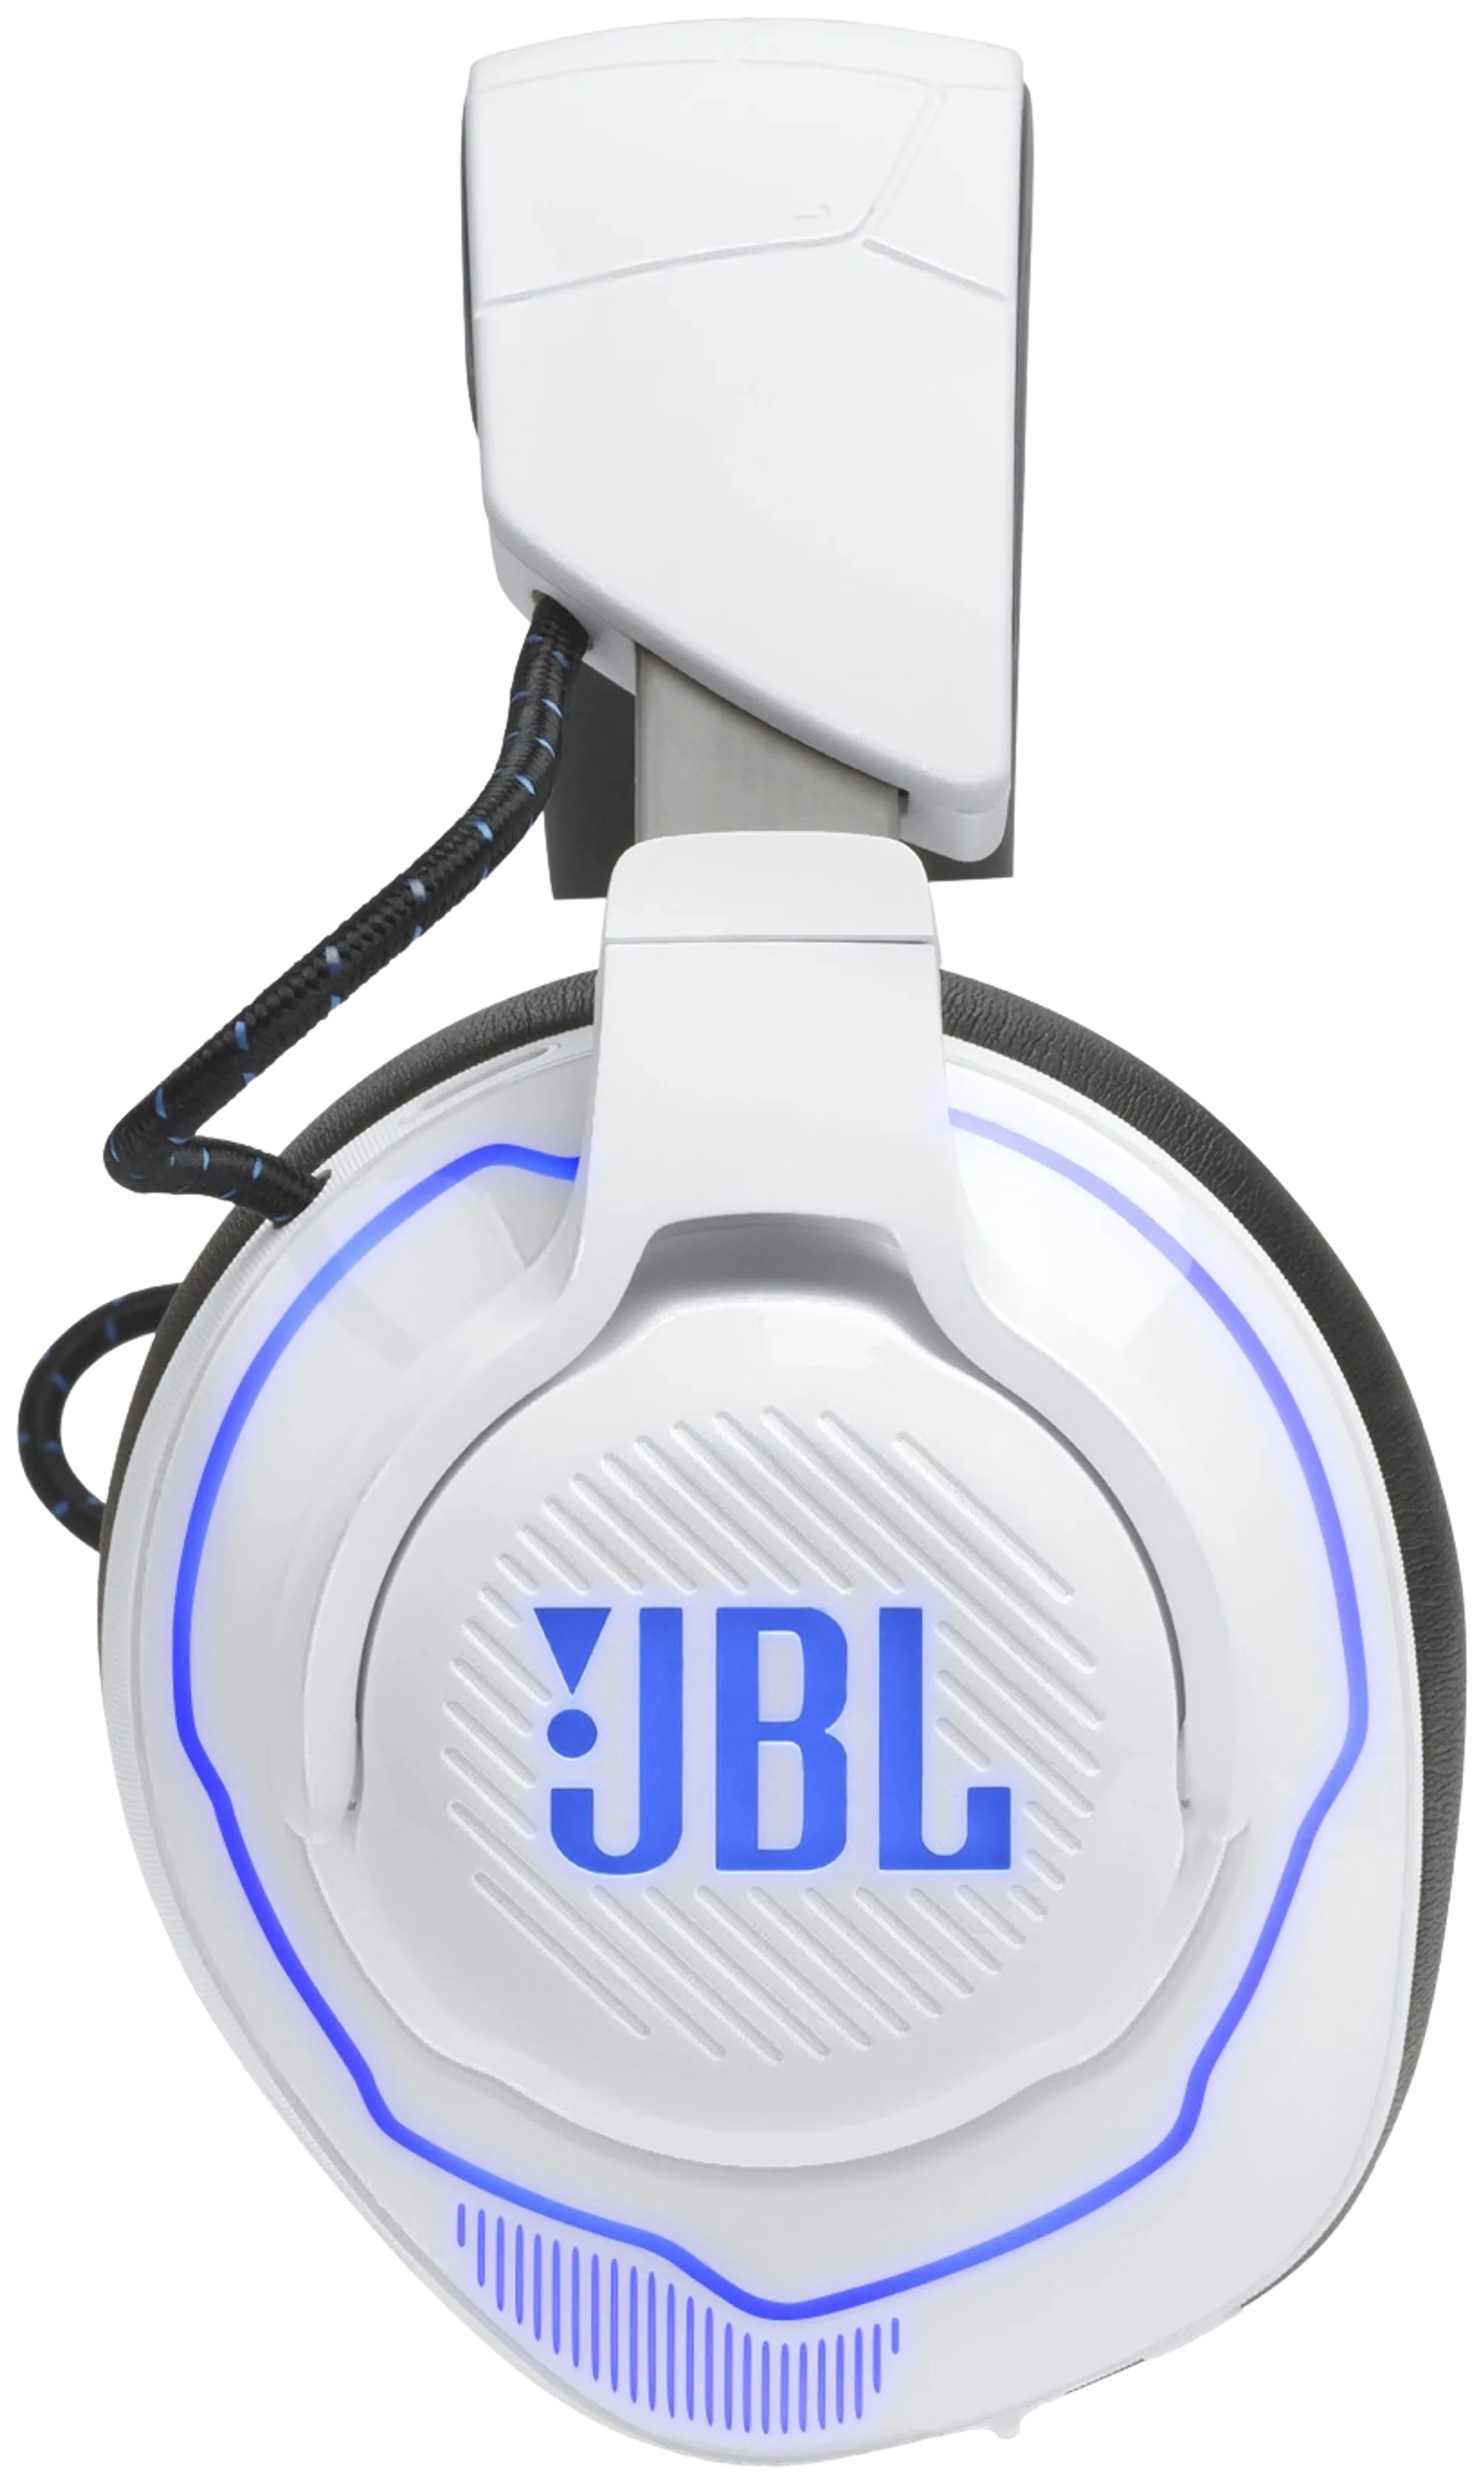 JBL pelikuuloke Quantum 910 PlayStation white blue - 6